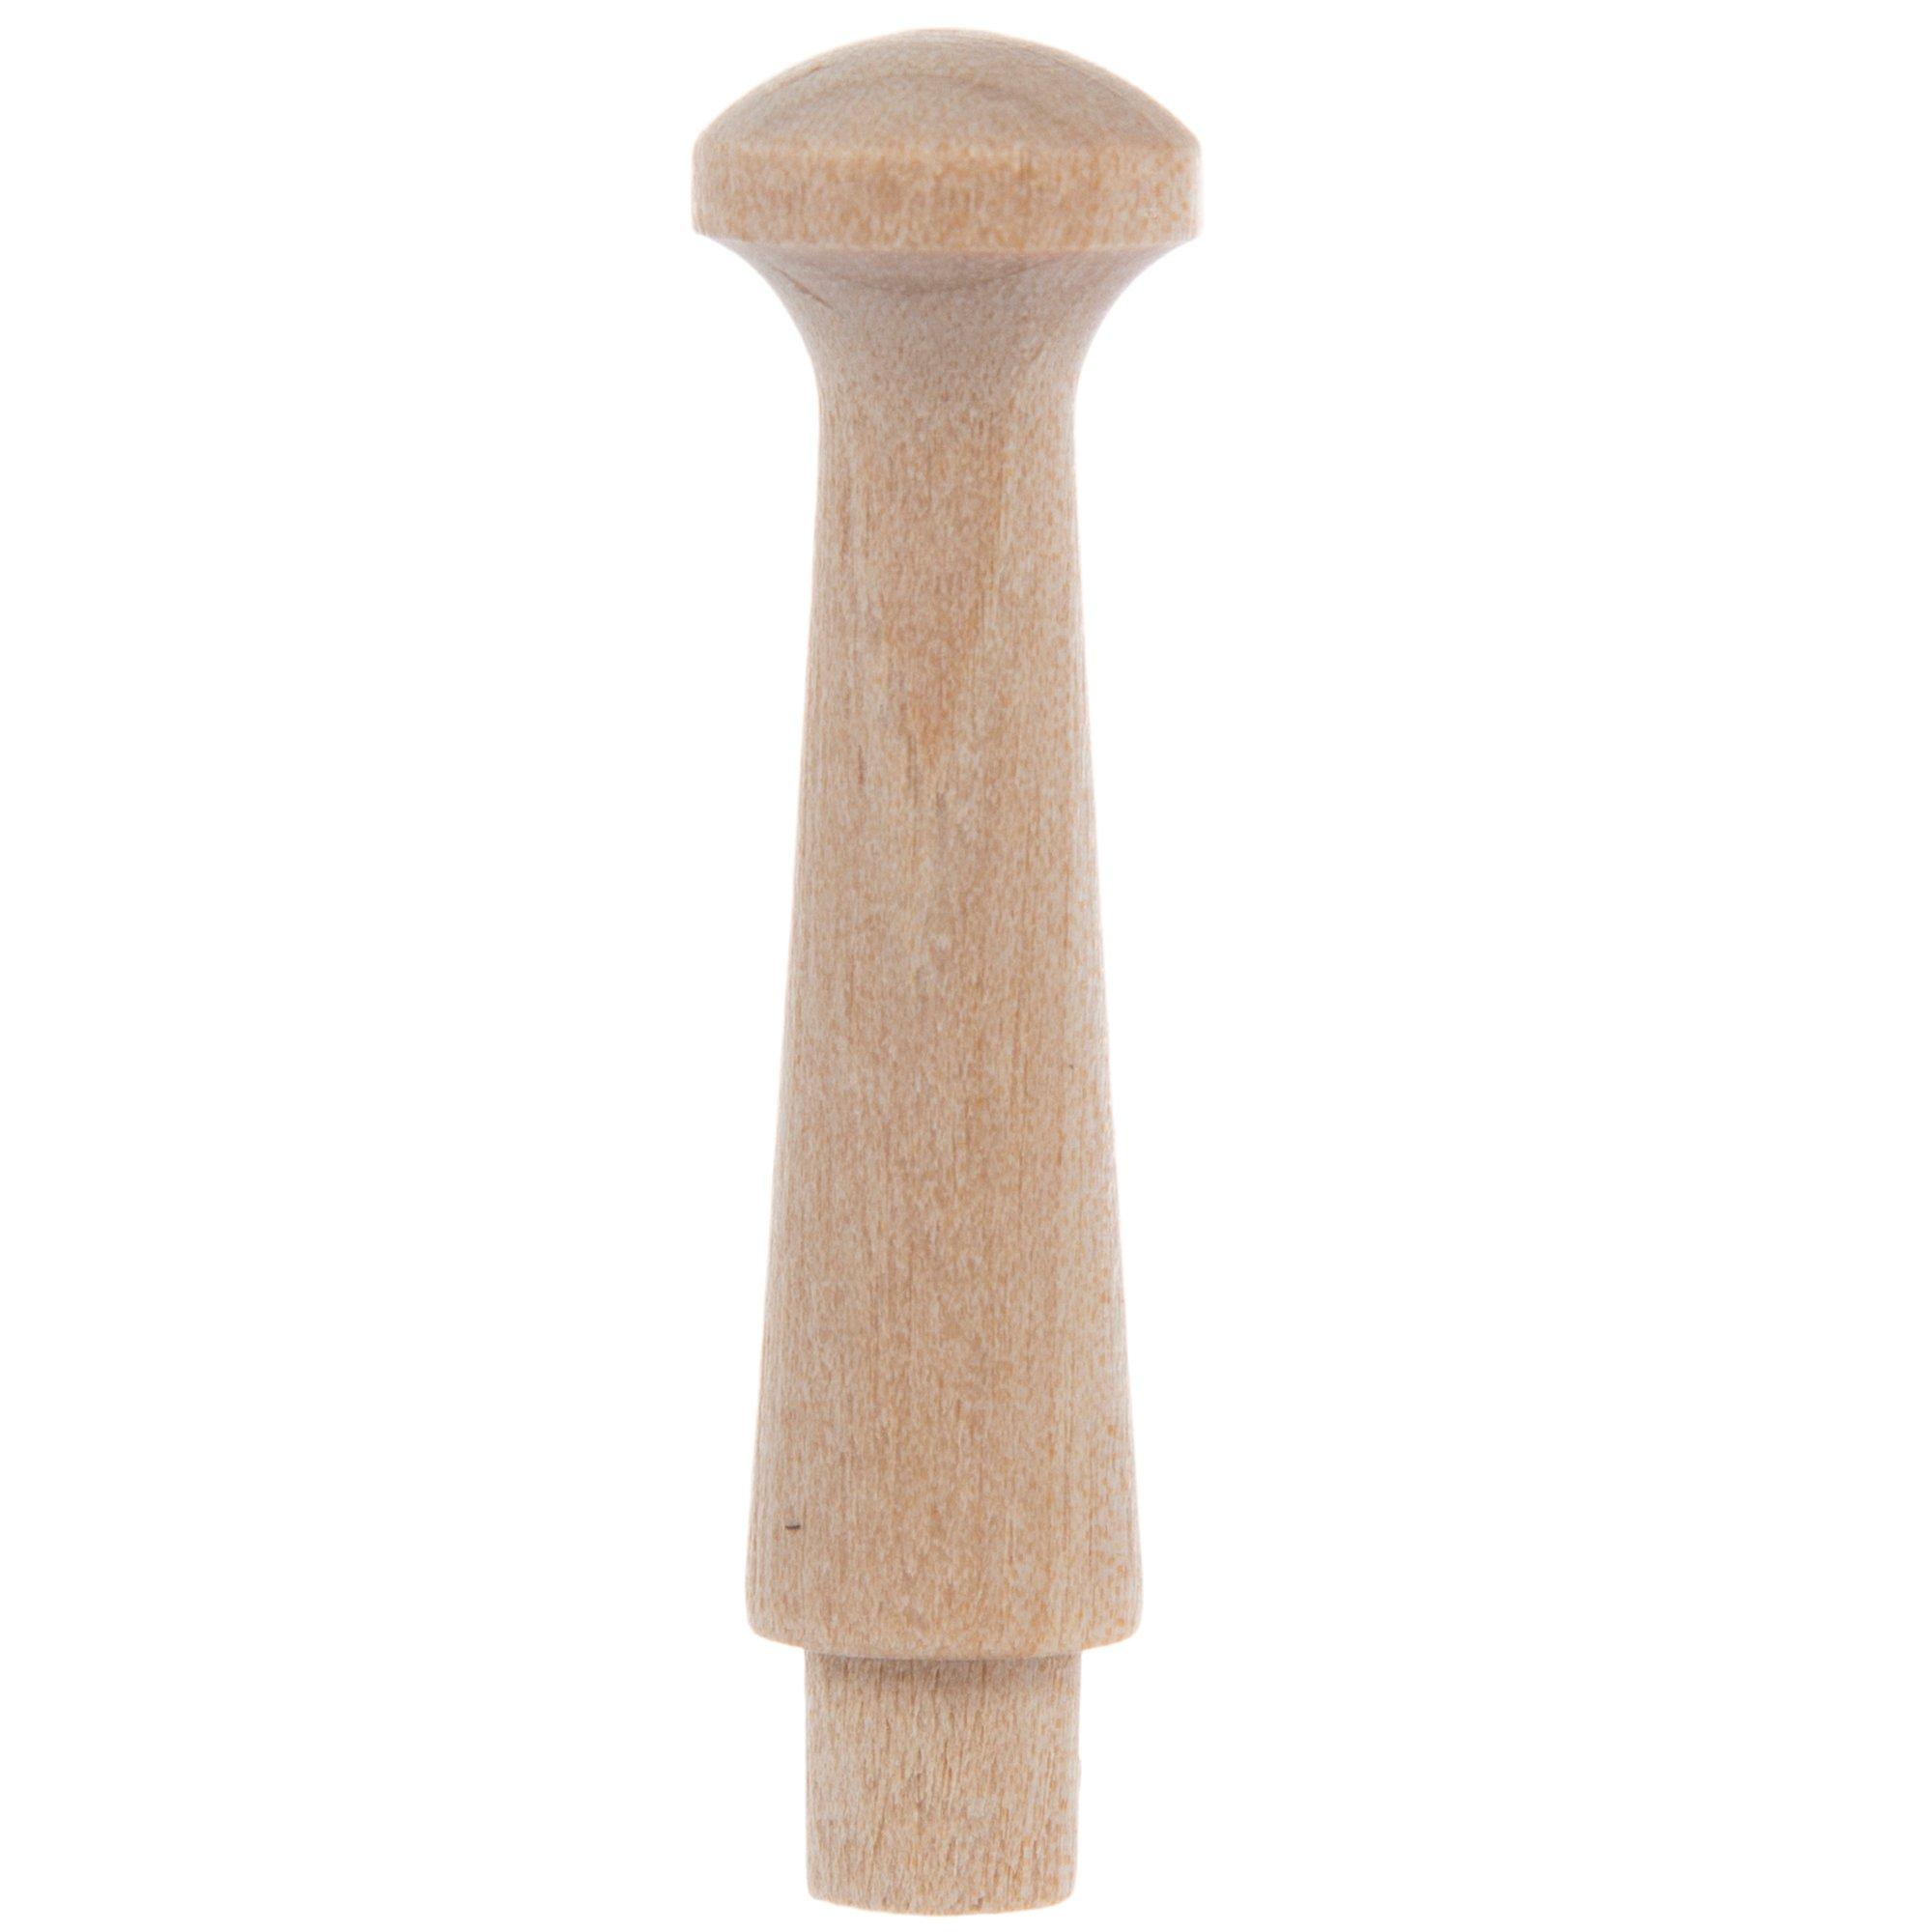 Loose Shaker Pegs & Bulk Shaker Pegs in solid Maple Wood